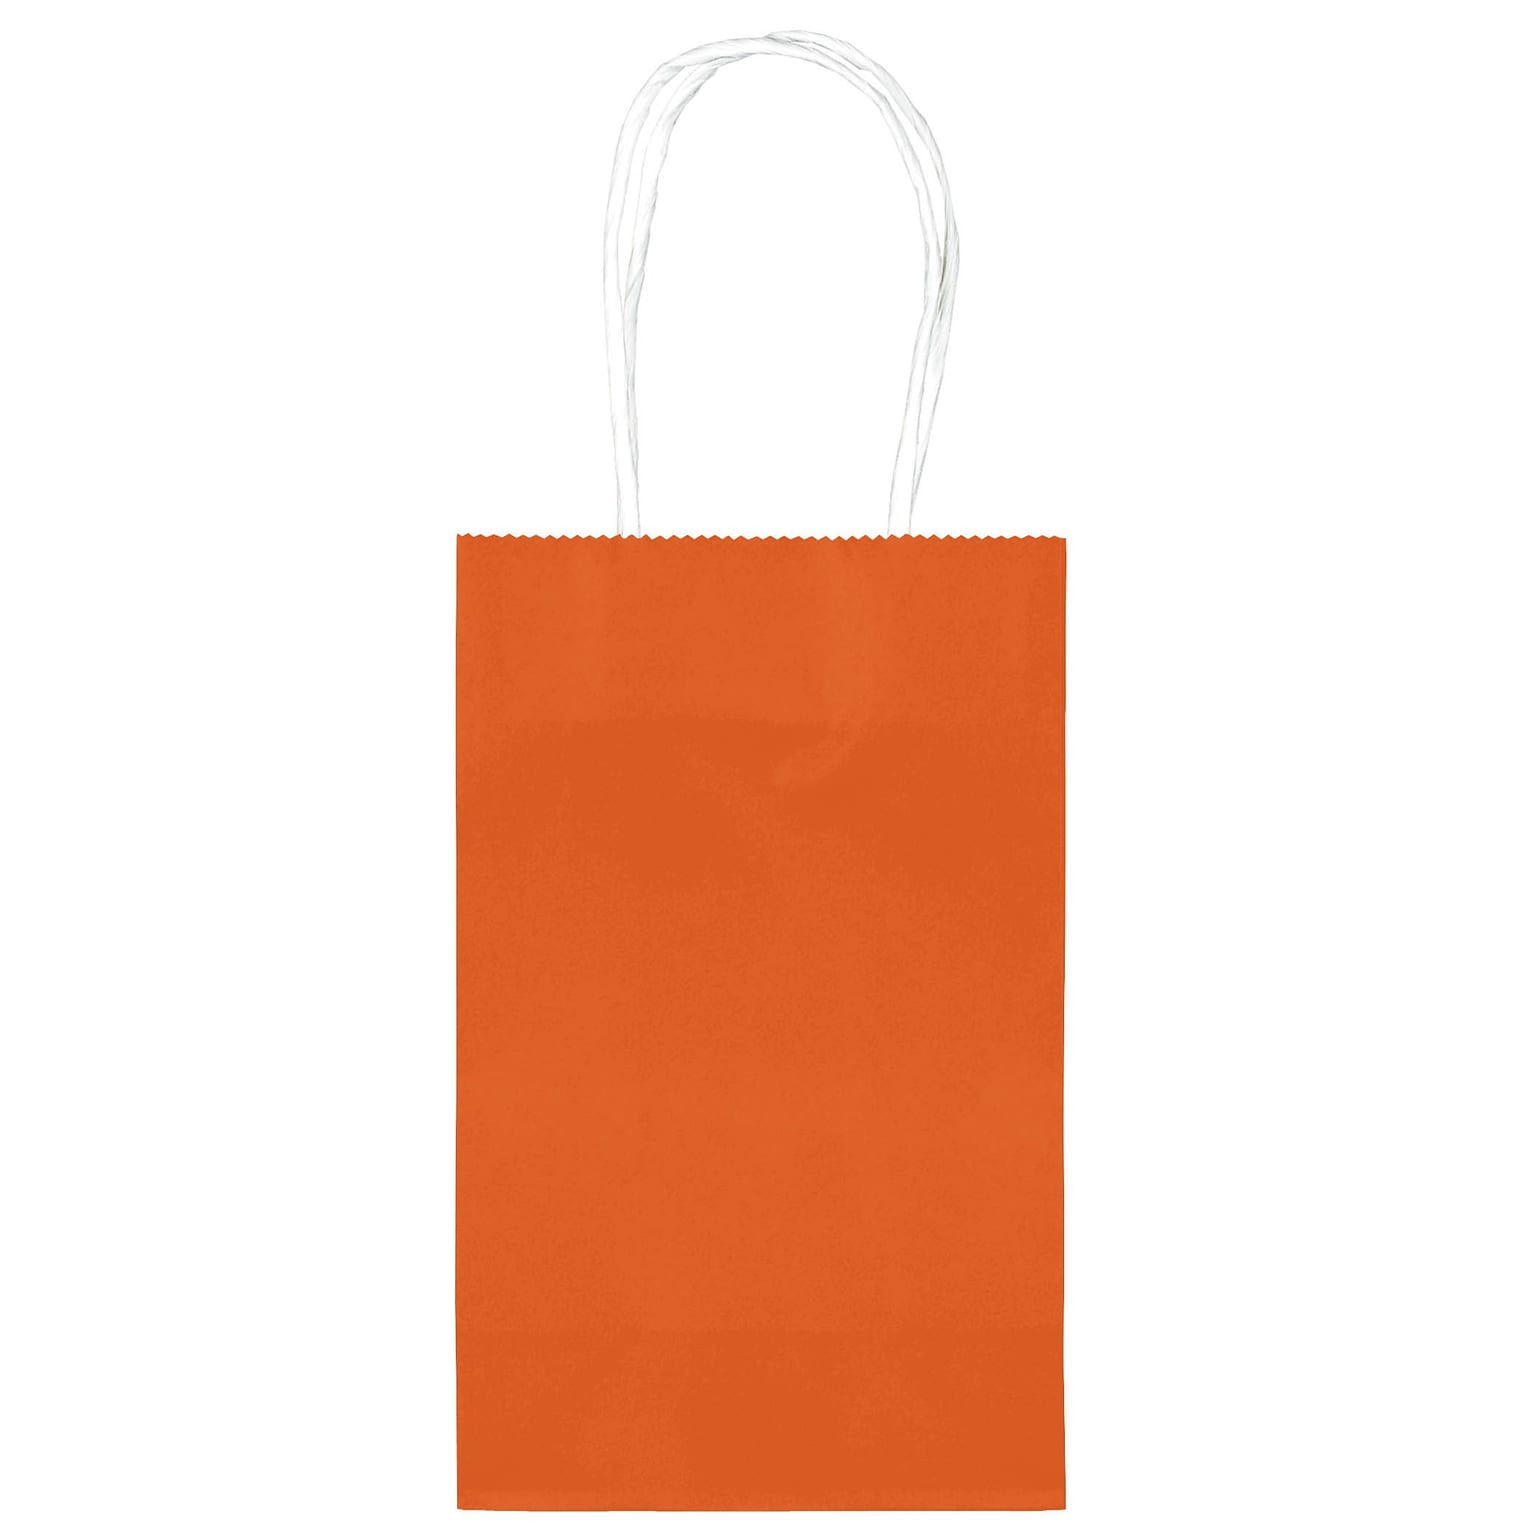 Amscan Kraft Paper Bag, 8.25 x 5.25, Orange Peel, 4/Pack, 10 Bags/Pack (162500.05)